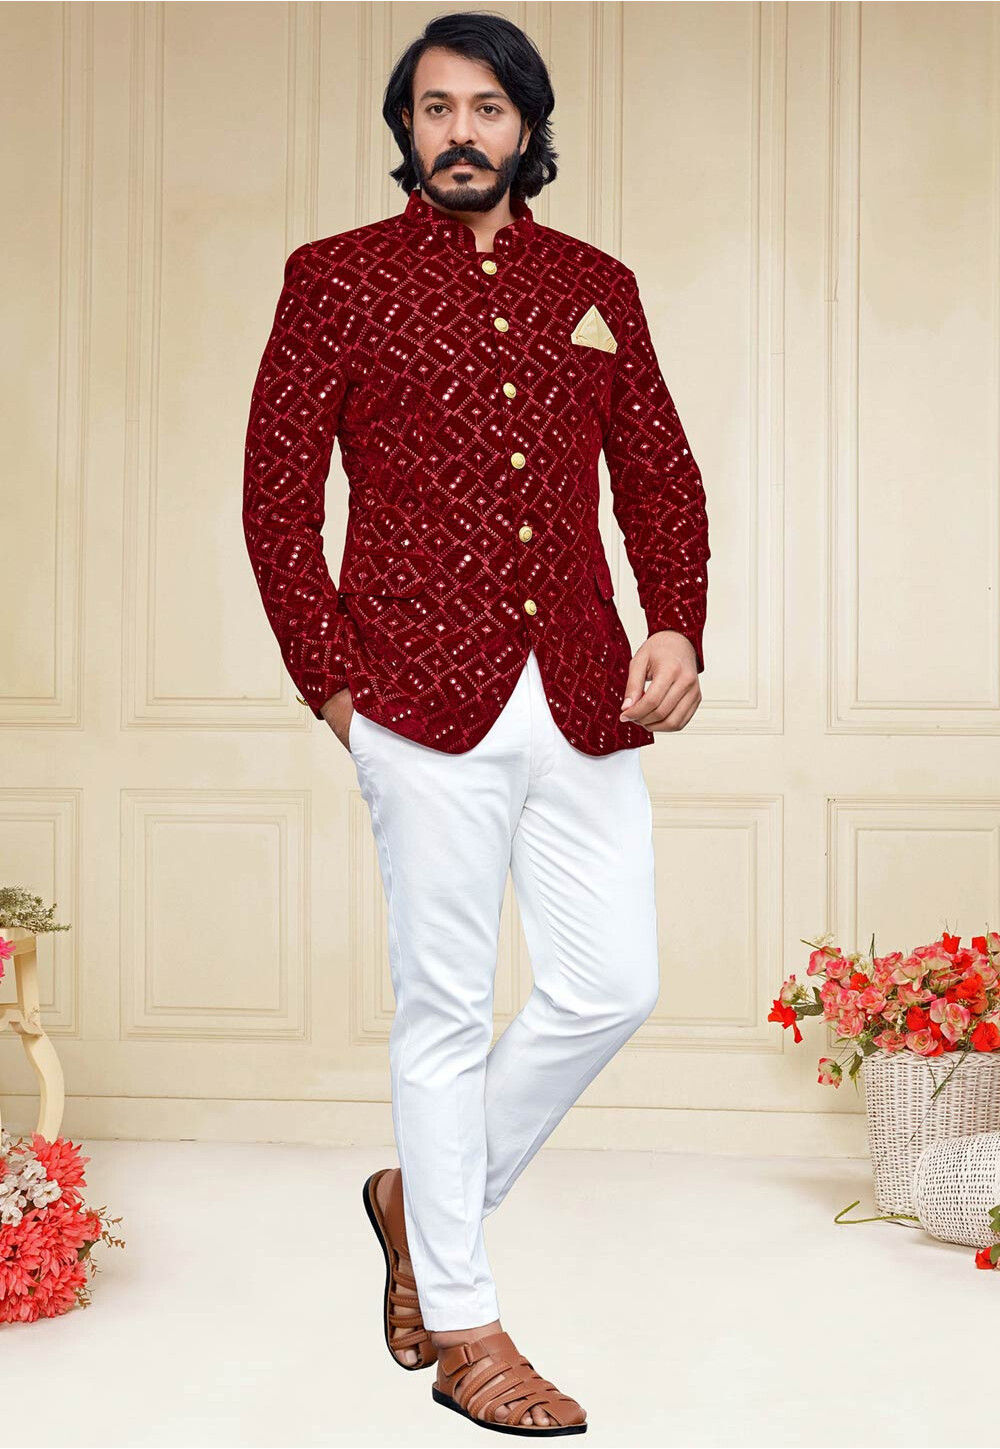 Buy Designer Jodhpur Breeches Pants  Best Designer Trousers for Men   Rohit Kamra  Page 2  Rohit Kamra Jaipur